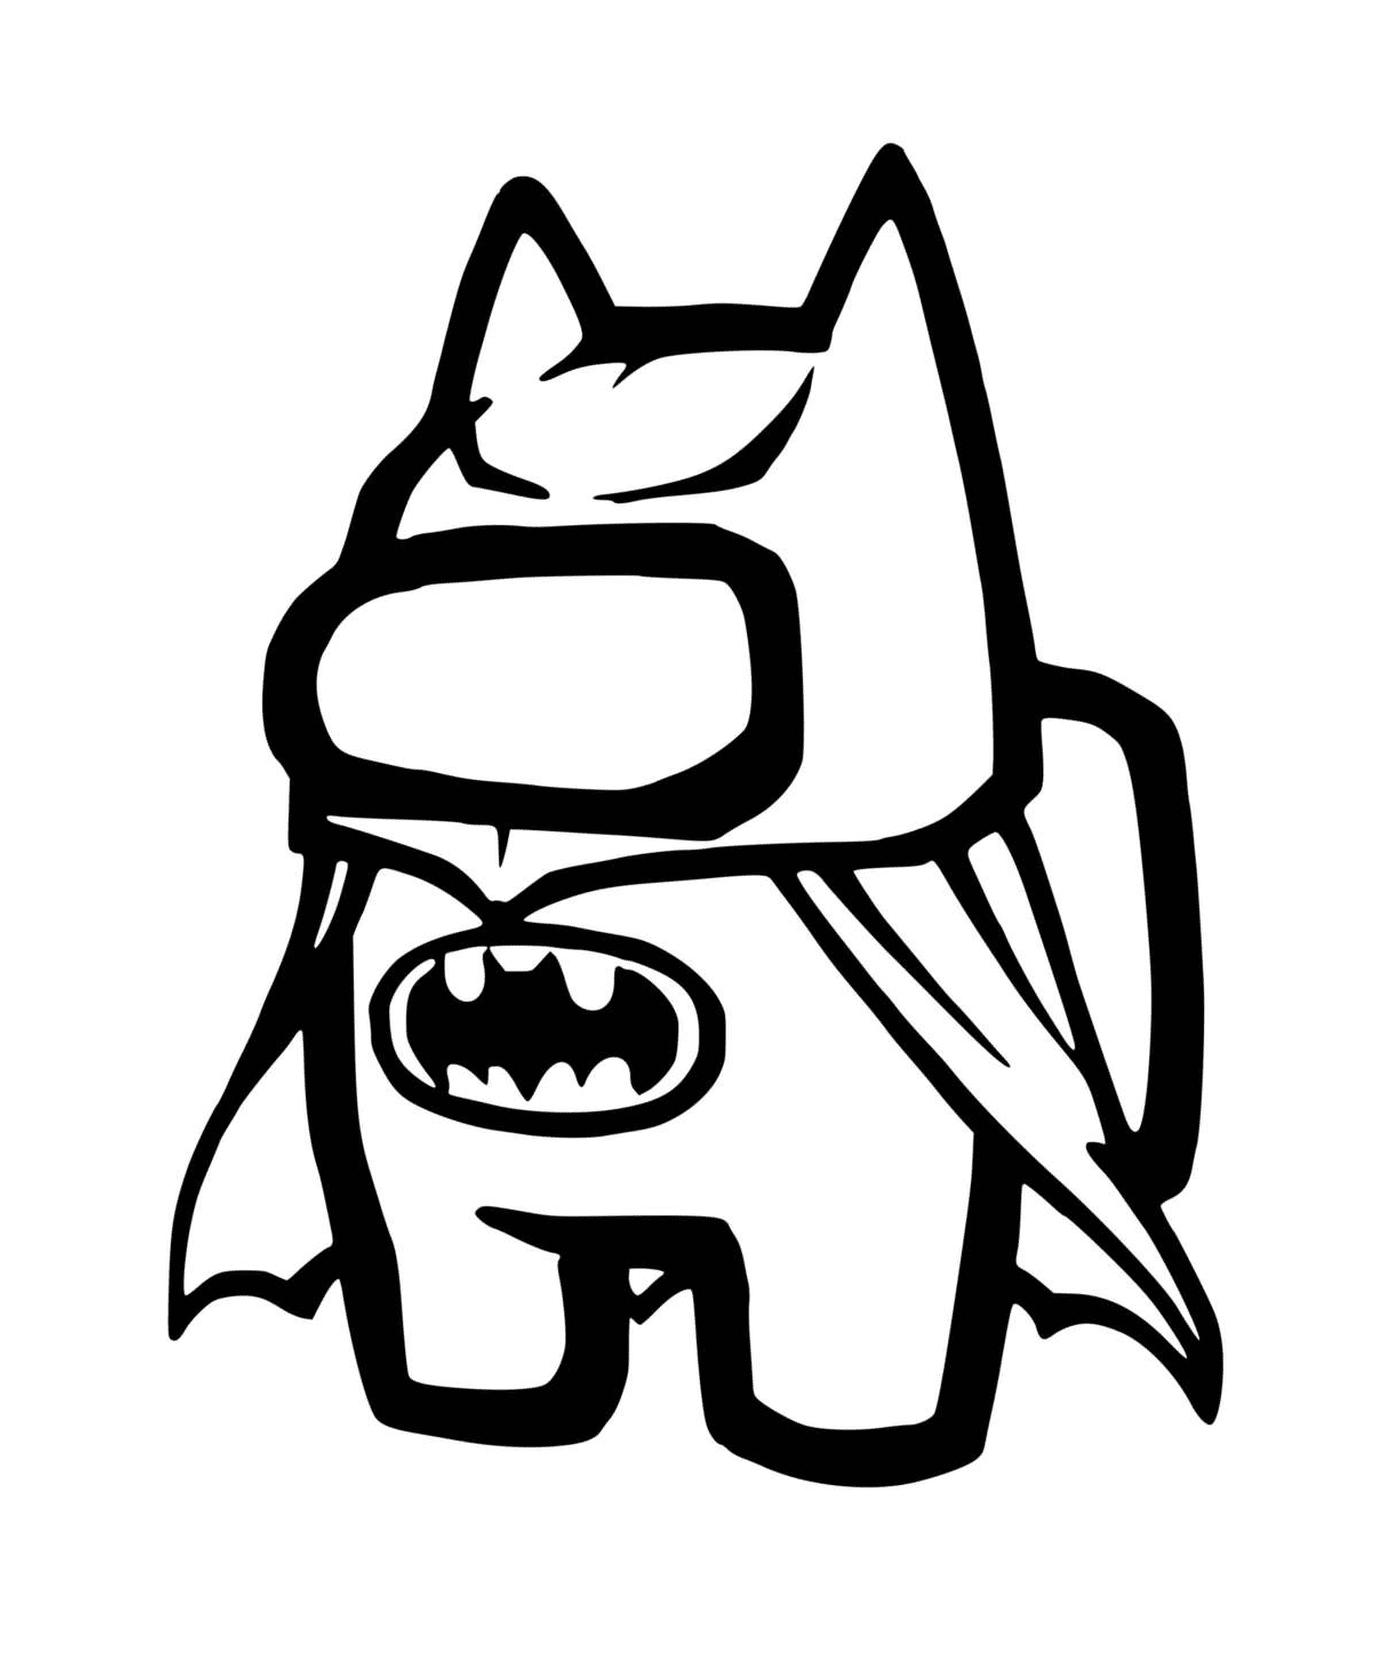  character of Batman 